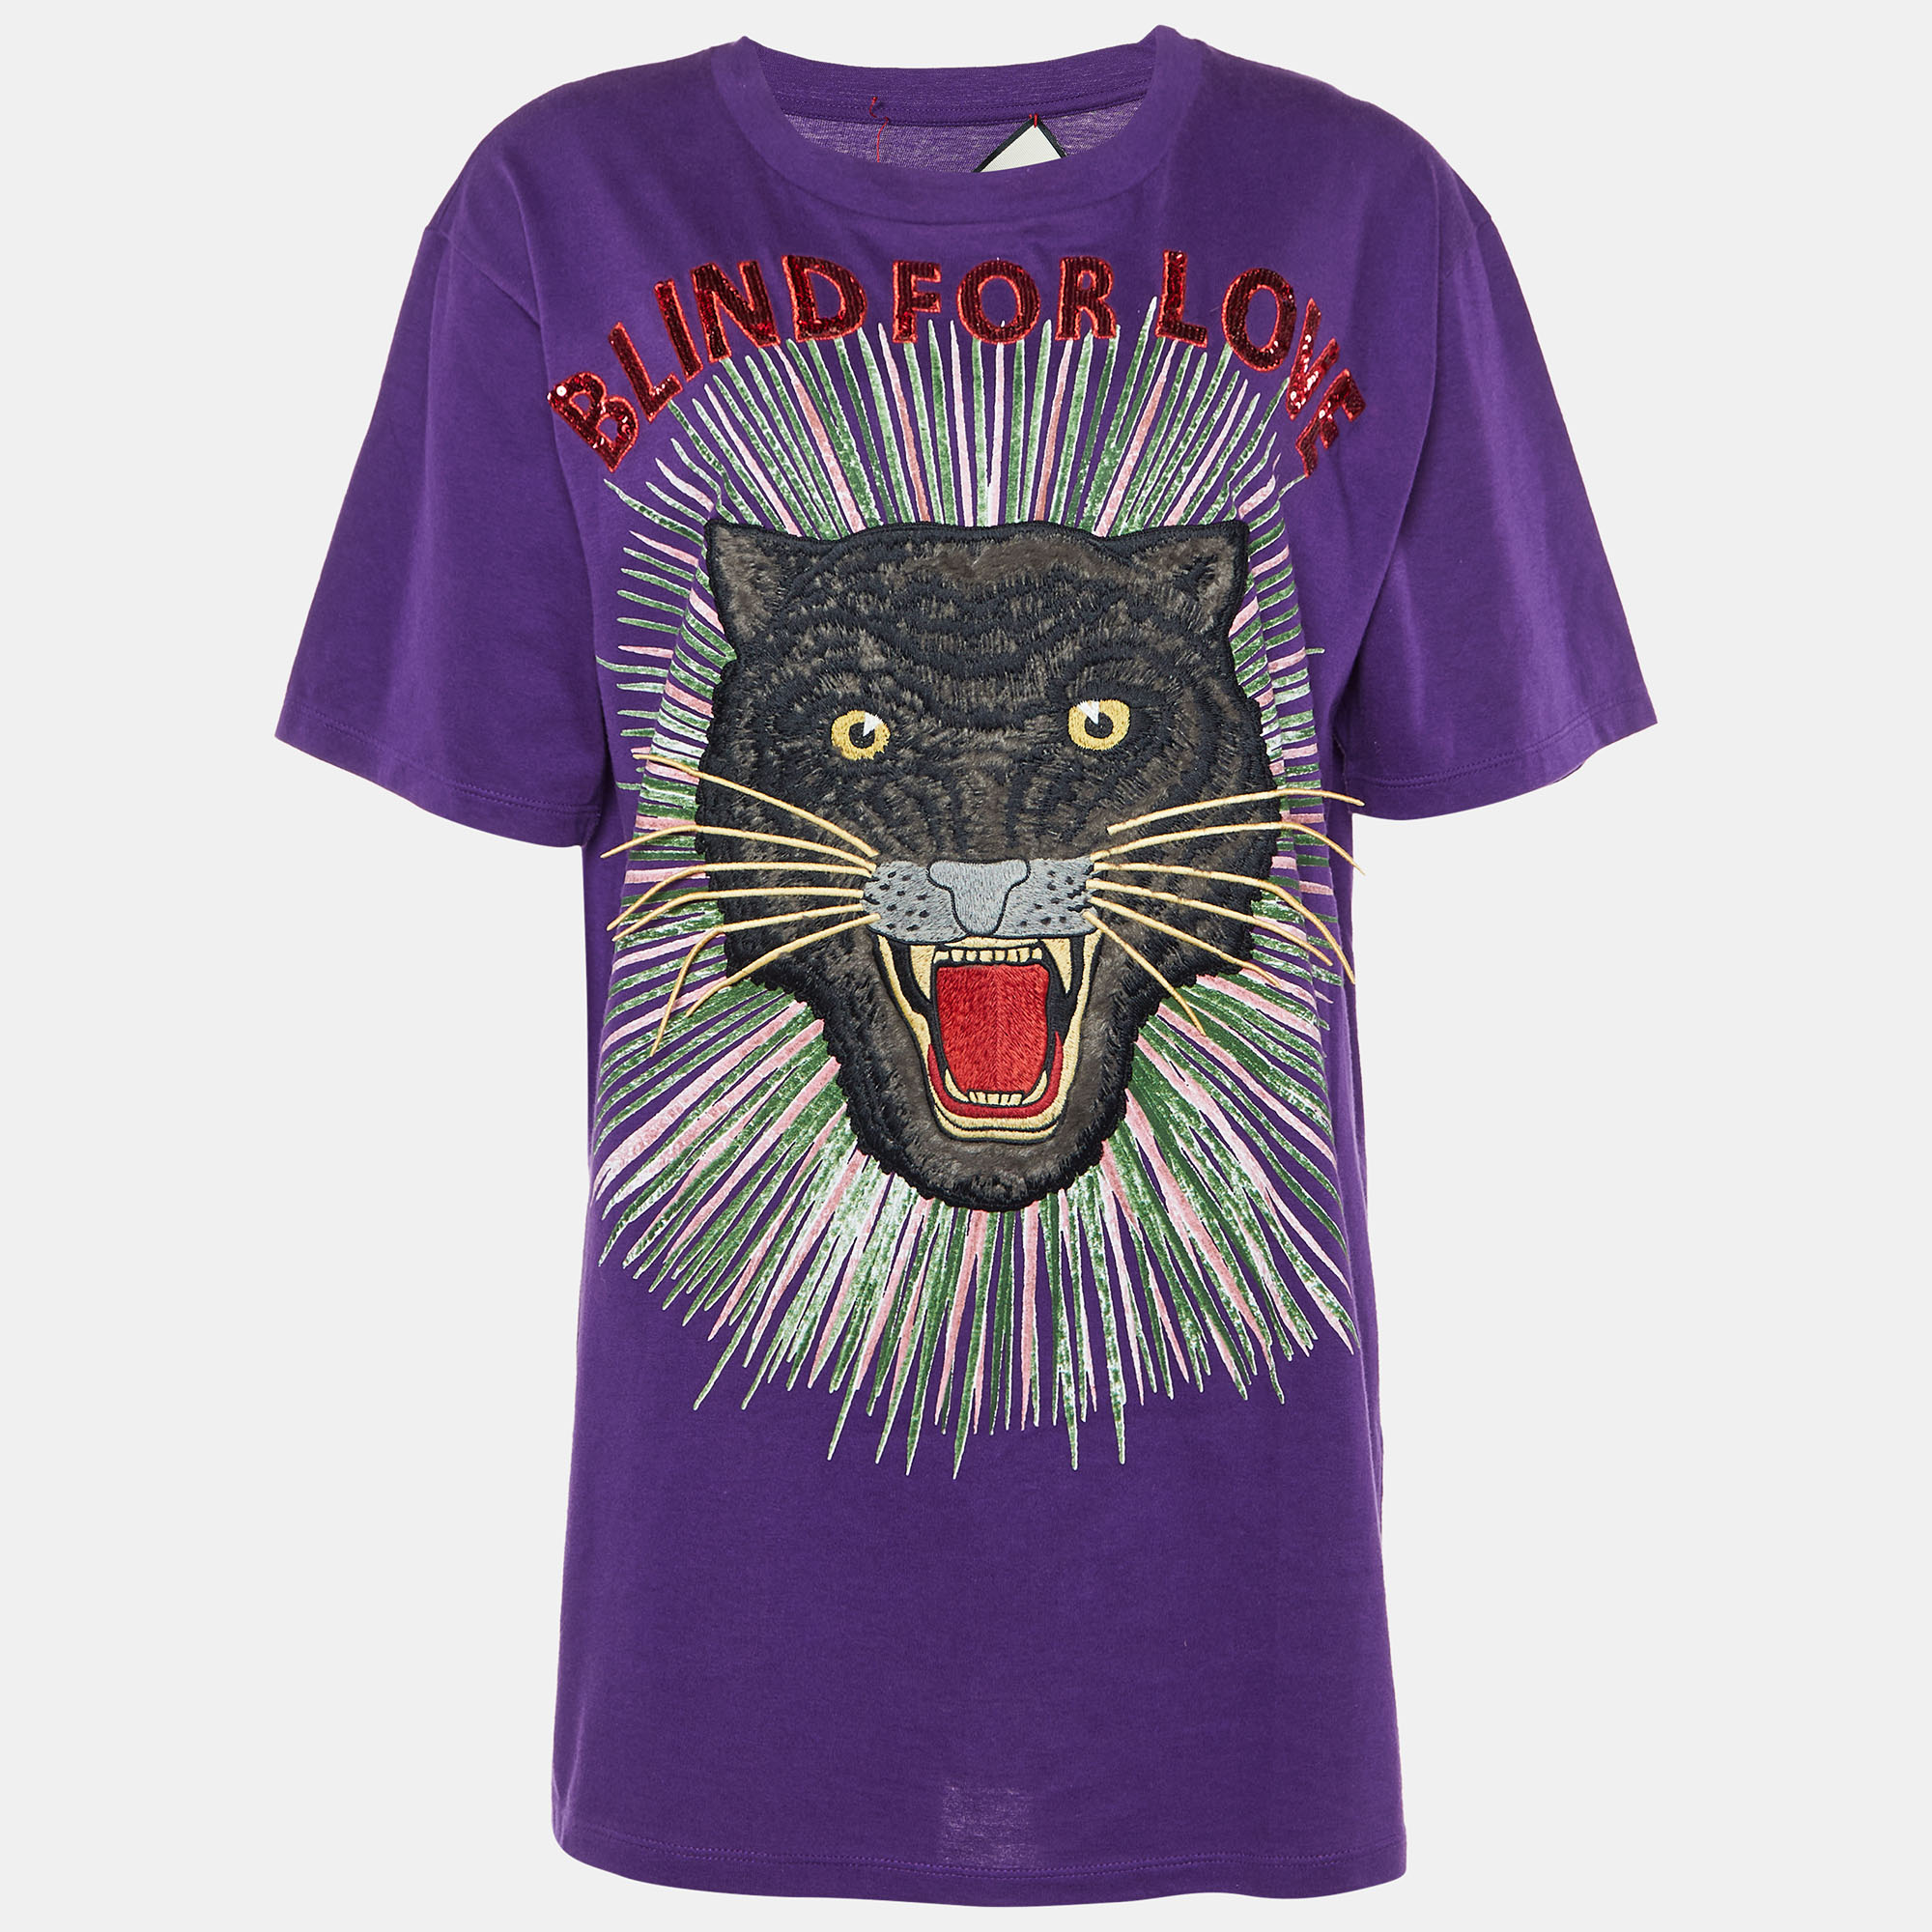 

Gucci Purple Cotton Blind For Love Appliqued Crew Neck T-Shirt S